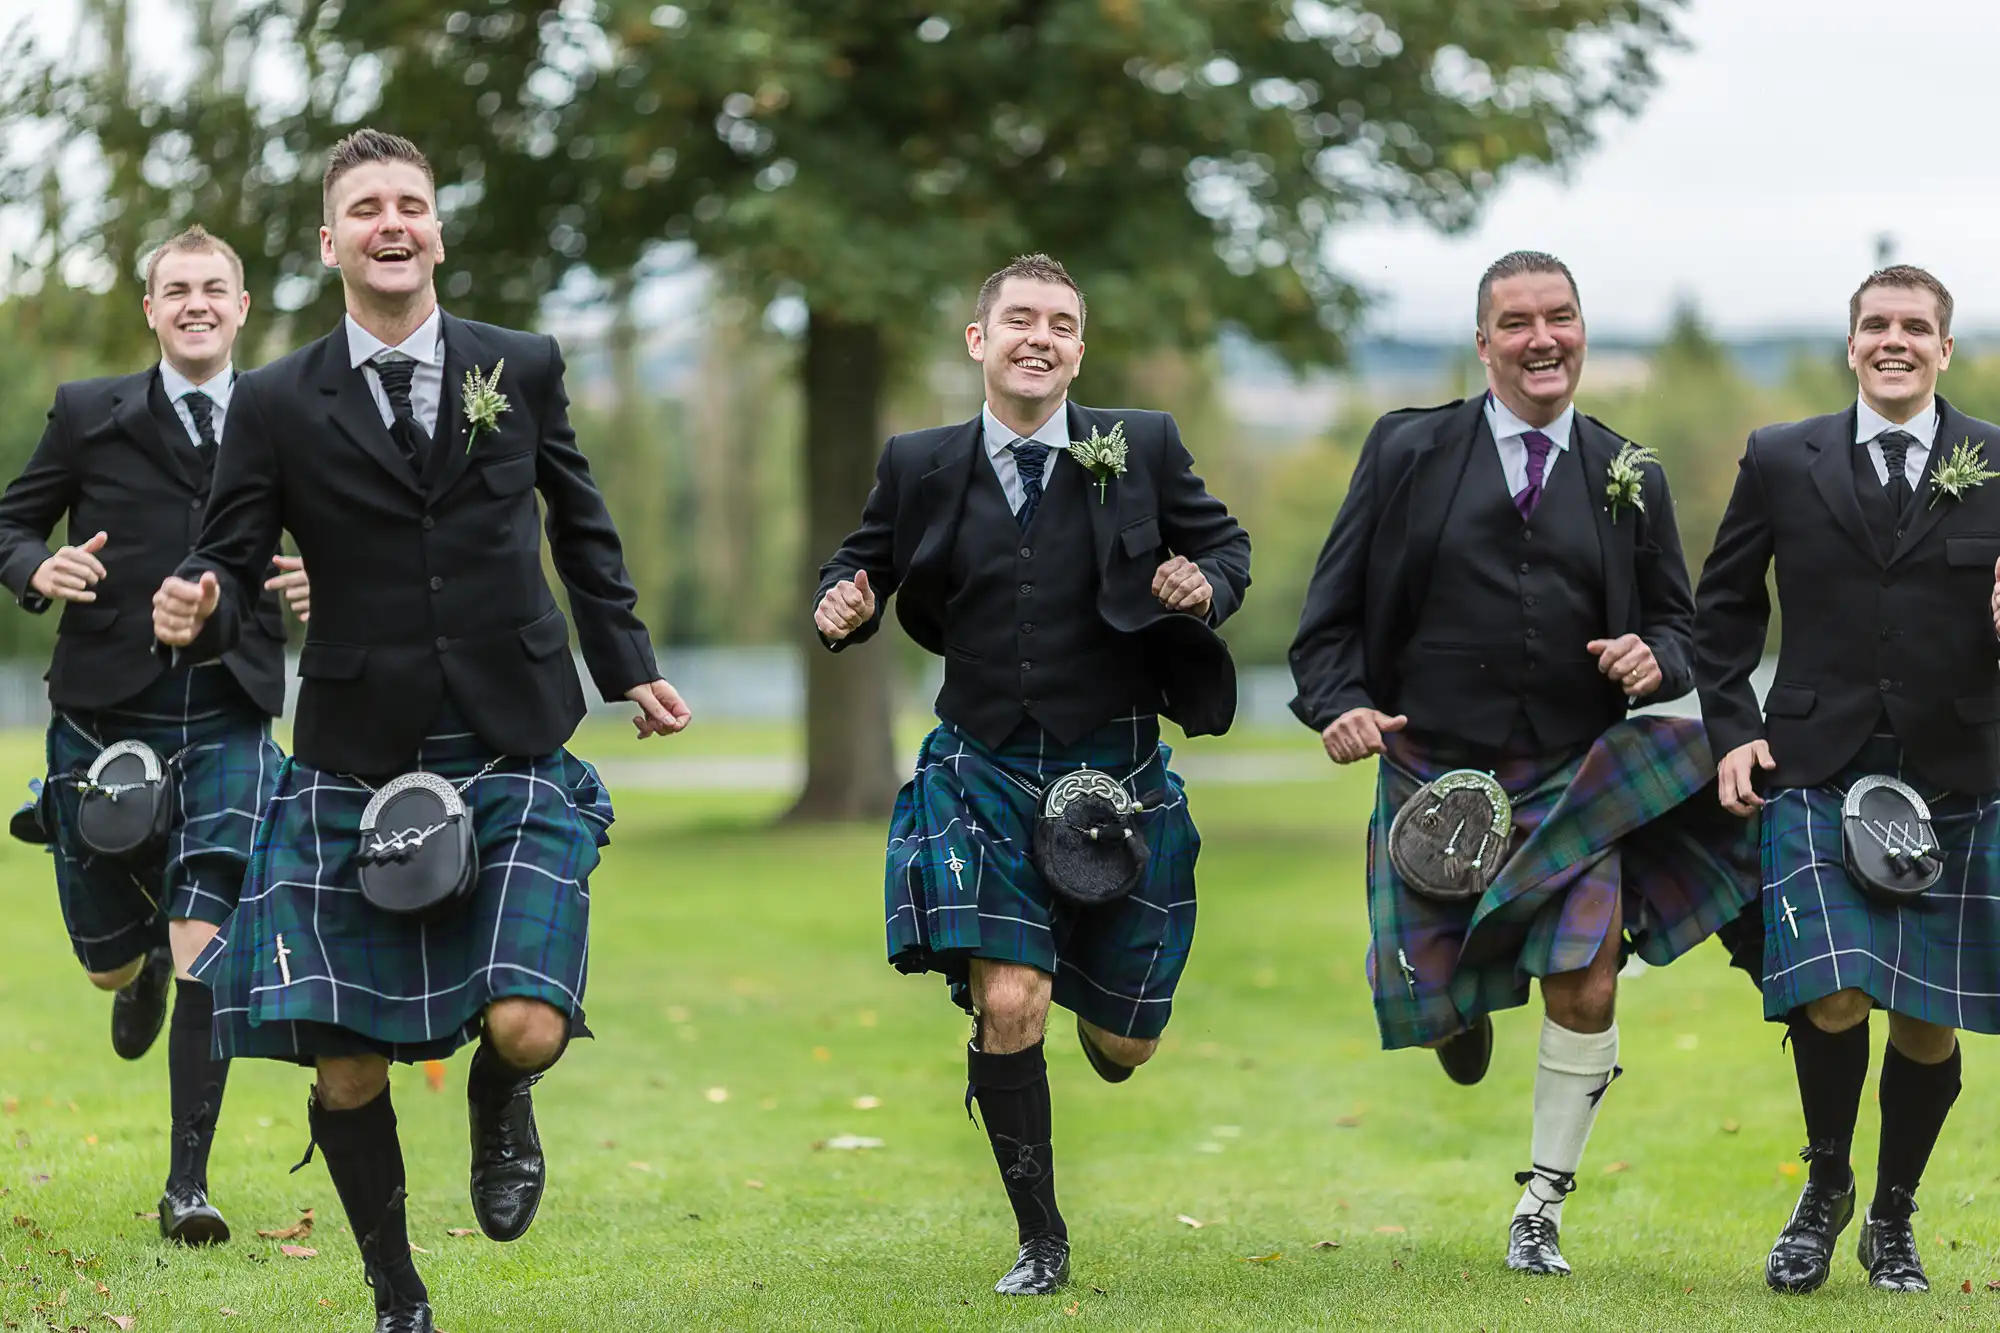 Four men in scottish kilts and jackets joyfully running across a grassy field, smiling broadly.